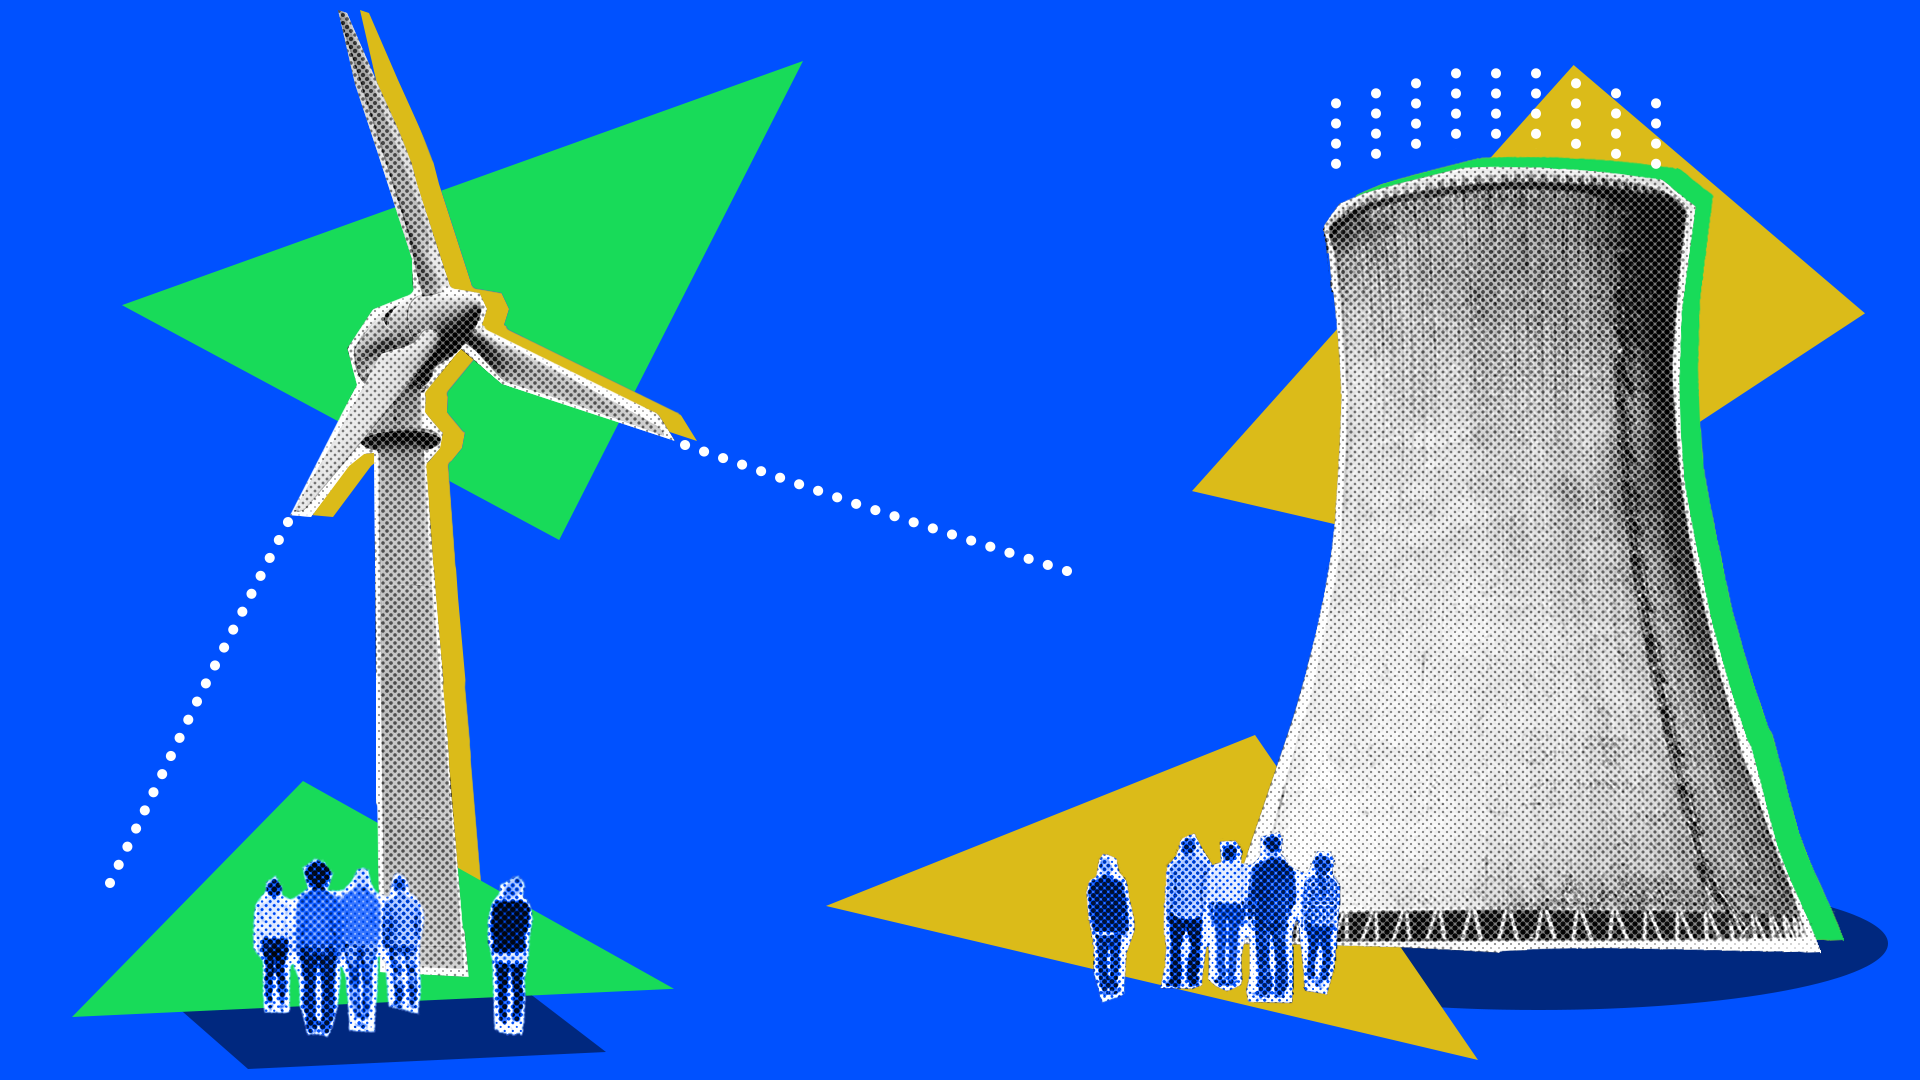 Wind power vs. nuclear power